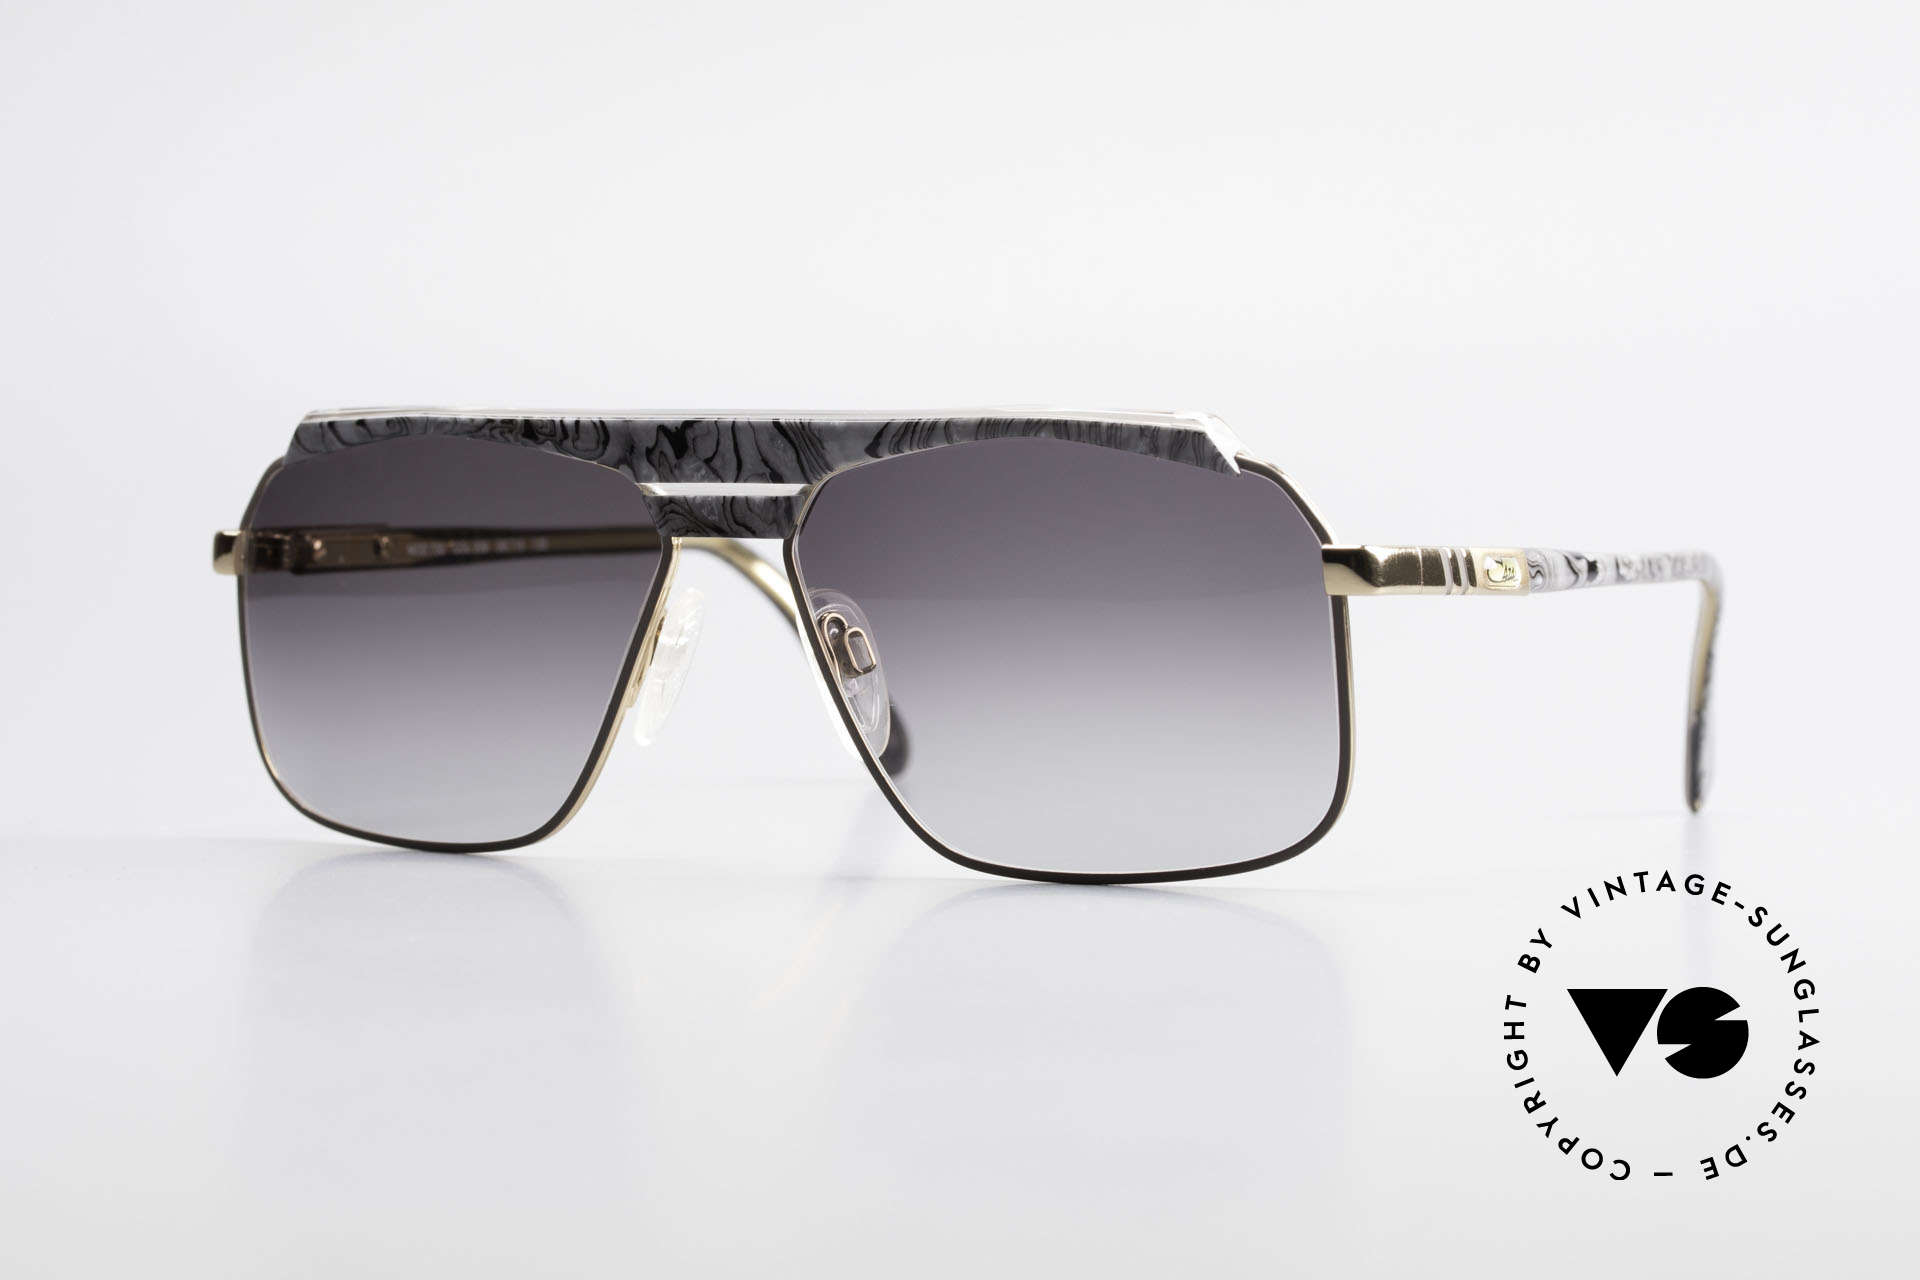 Cazal 730 Vintage 80's Cazal Sunglasses, classic vintage designer sunglasses from the 80's, Made for Men